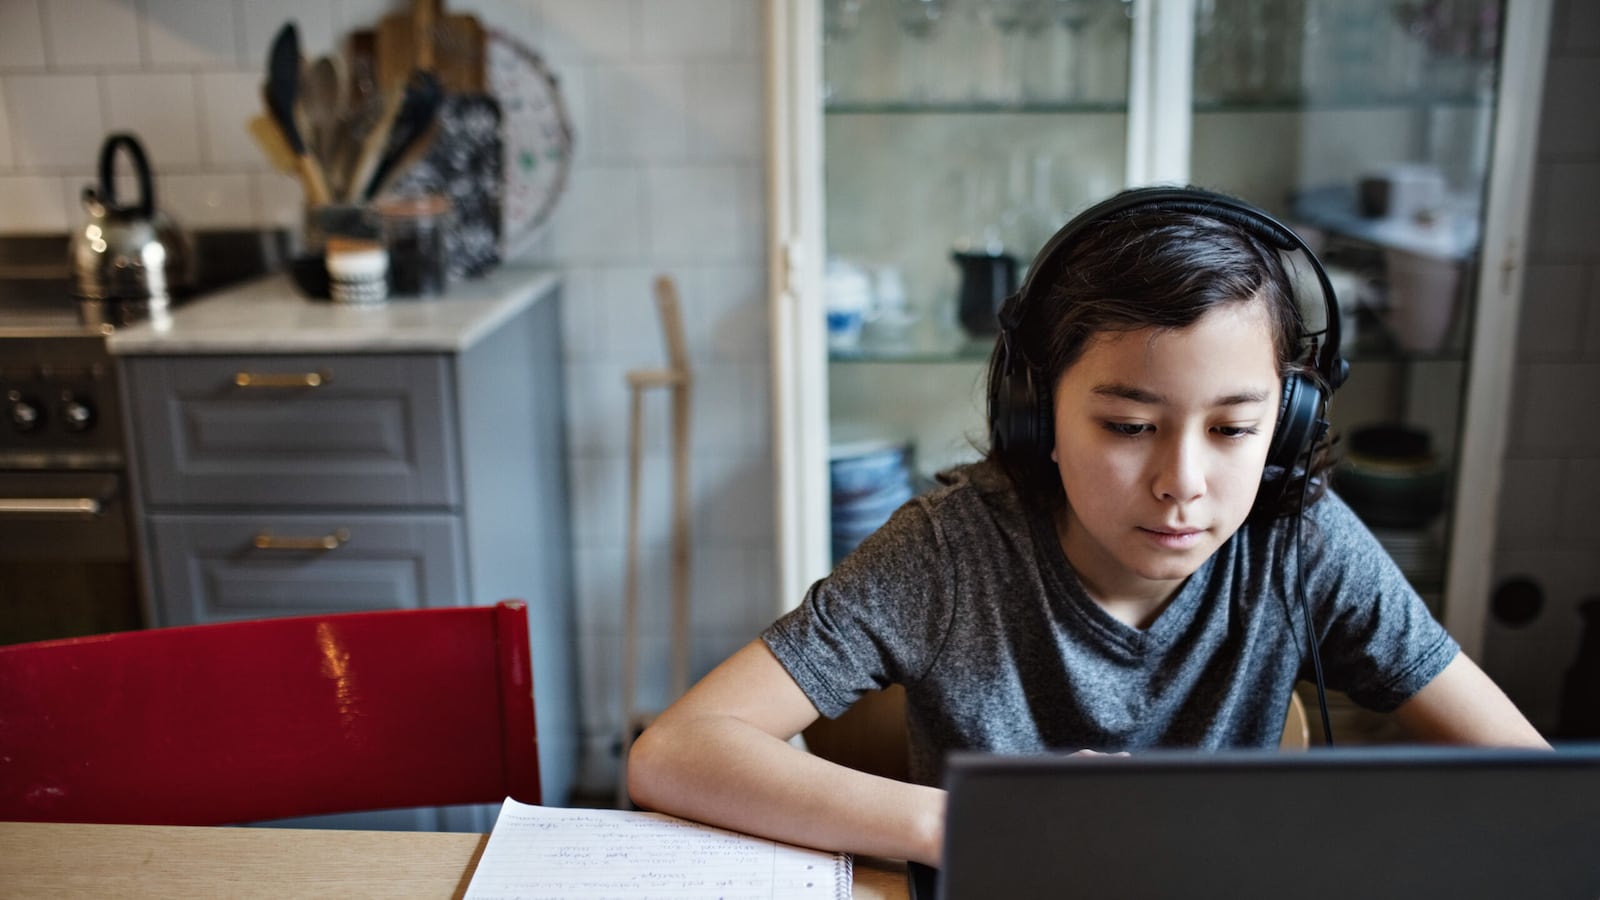 Boy wearing headphones while using laptop during homework at home.